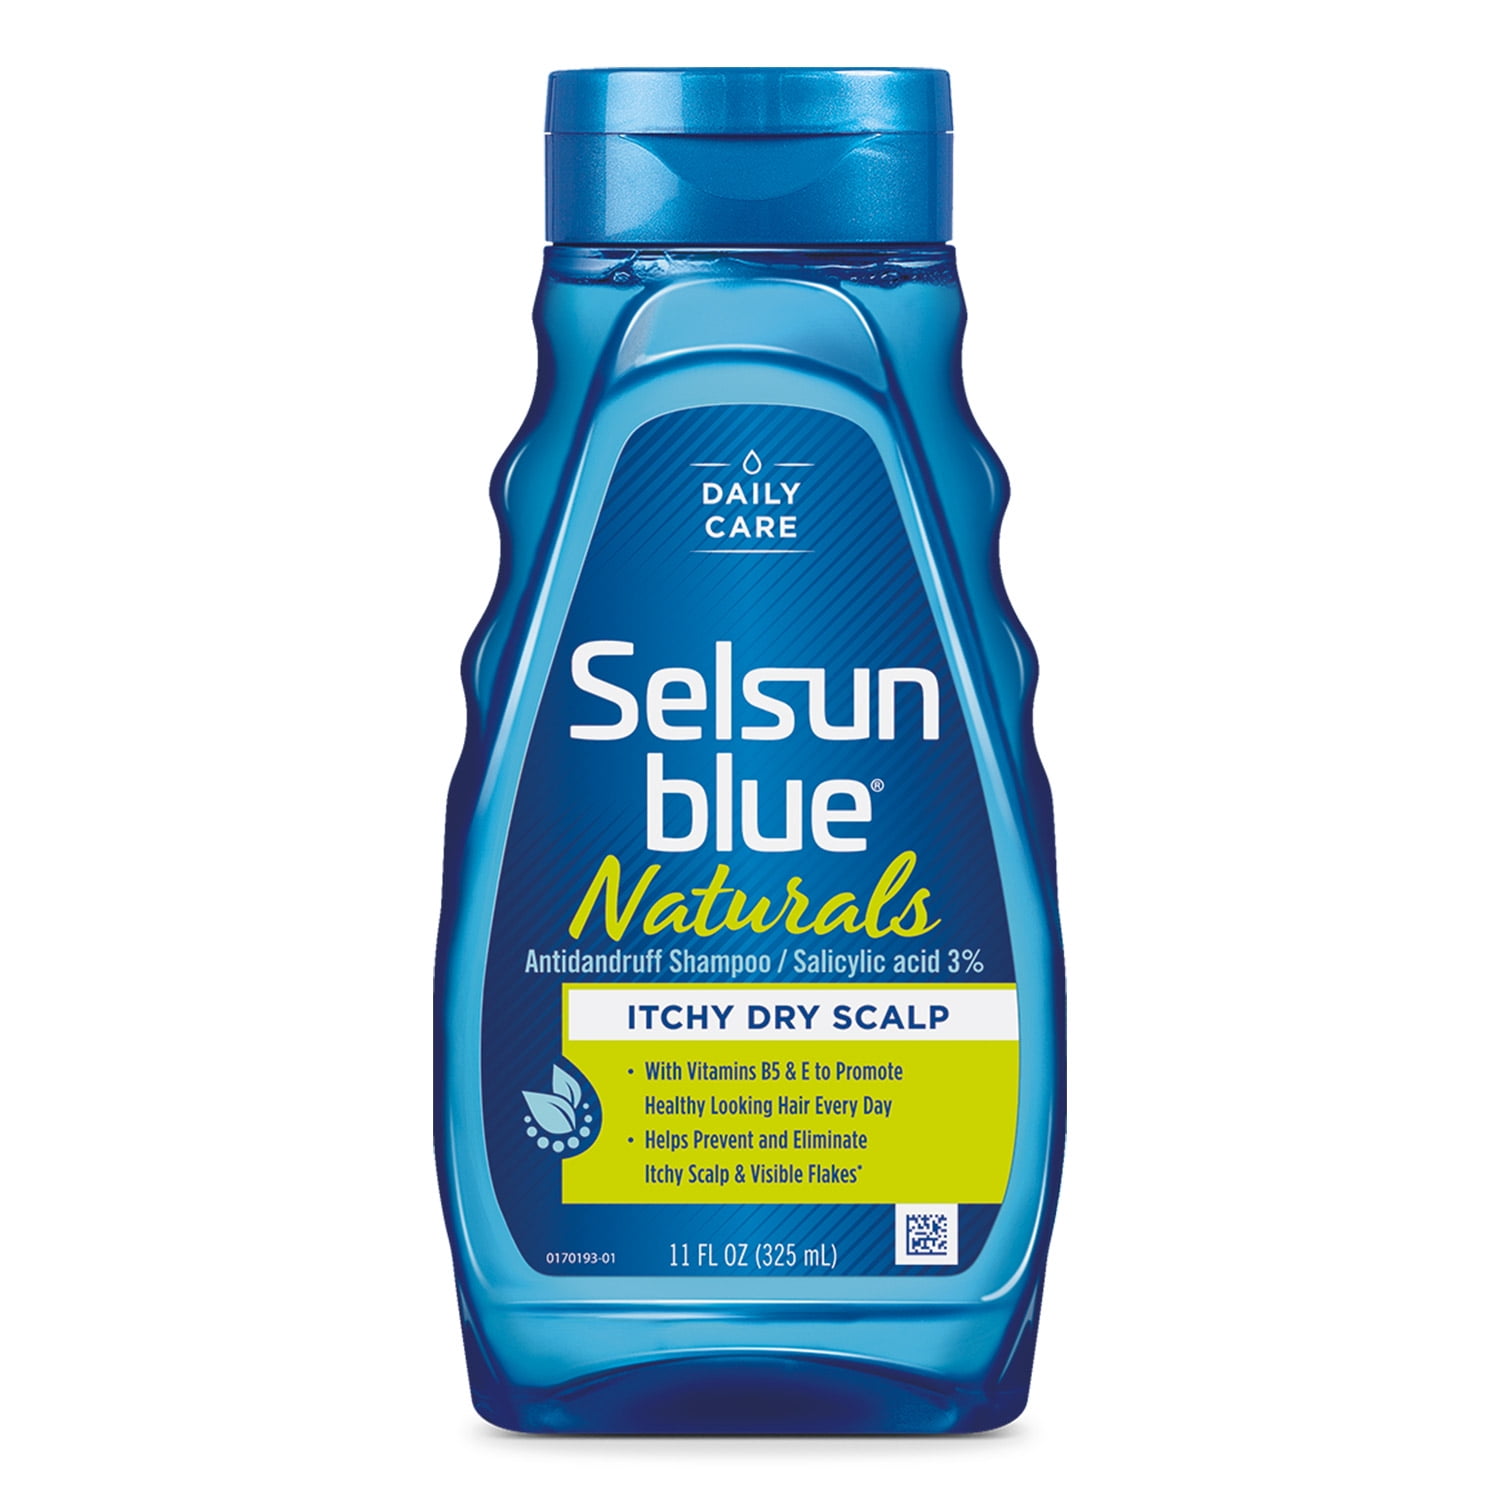 Selsun Blue Naturals Nourishing Moisturizing Itchy Dry Scalp Dandruff Relief Daily Shampoo, 11 fl oz